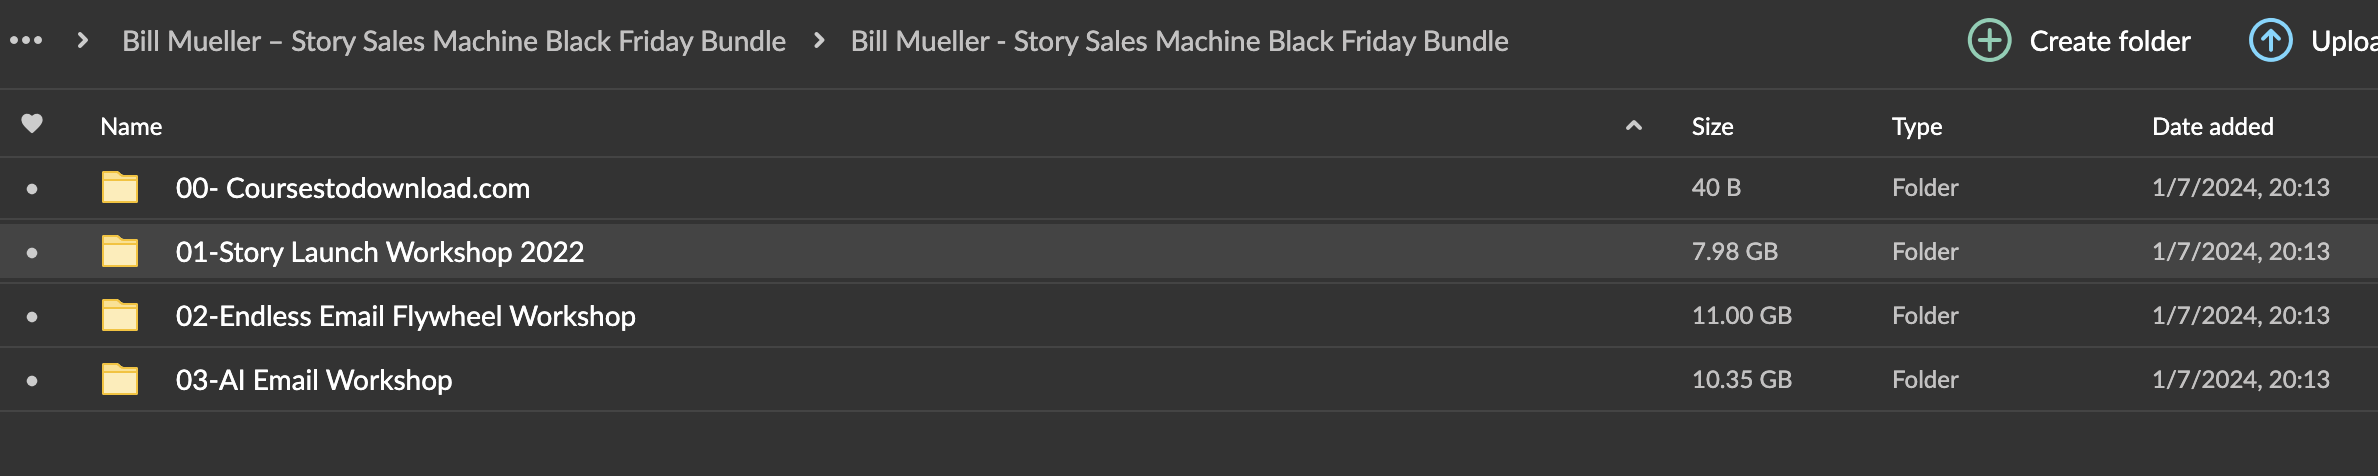 Bill Mueller – Story Sales Machine Black Friday Bundle Download